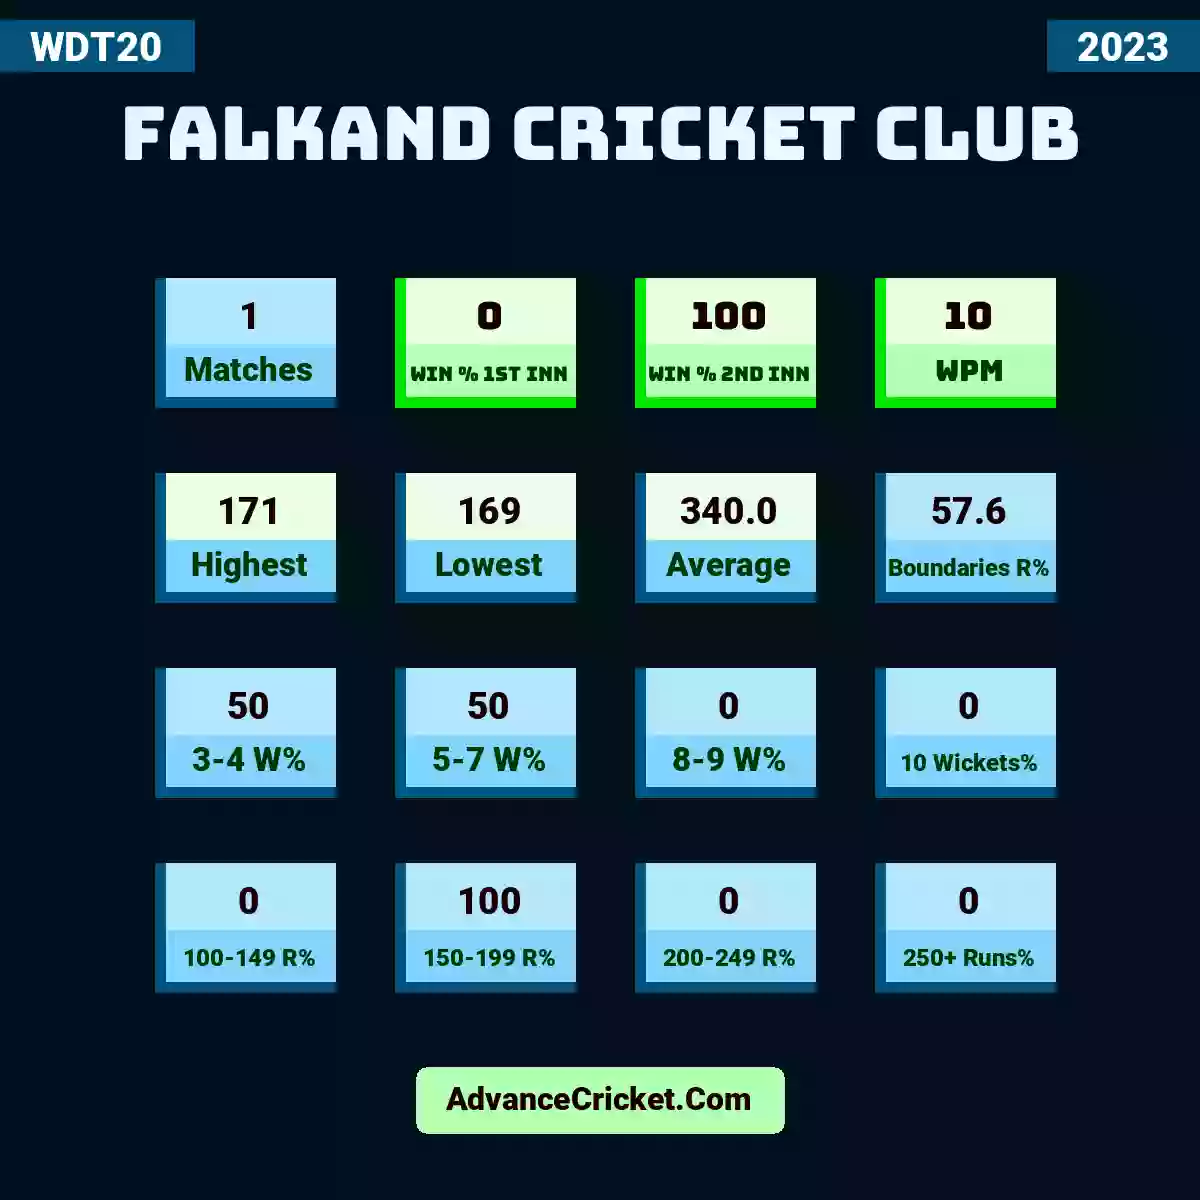 Image showing Falkand Cricket Club with Matches: 1, Win % 1st Inn: 0, Win % 2nd Inn: 100, WPM: 10, Highest: 171, Lowest: 169, Average: 340.0, Boundaries R%: 57.6, 3-4 W%: 50, 5-7 W%: 50, 8-9 W%: 0, 10 Wickets%: 0, 100-149 R%: 0, 150-199 R%: 100, 200-249 R%: 0, 250+ Runs%: 0.